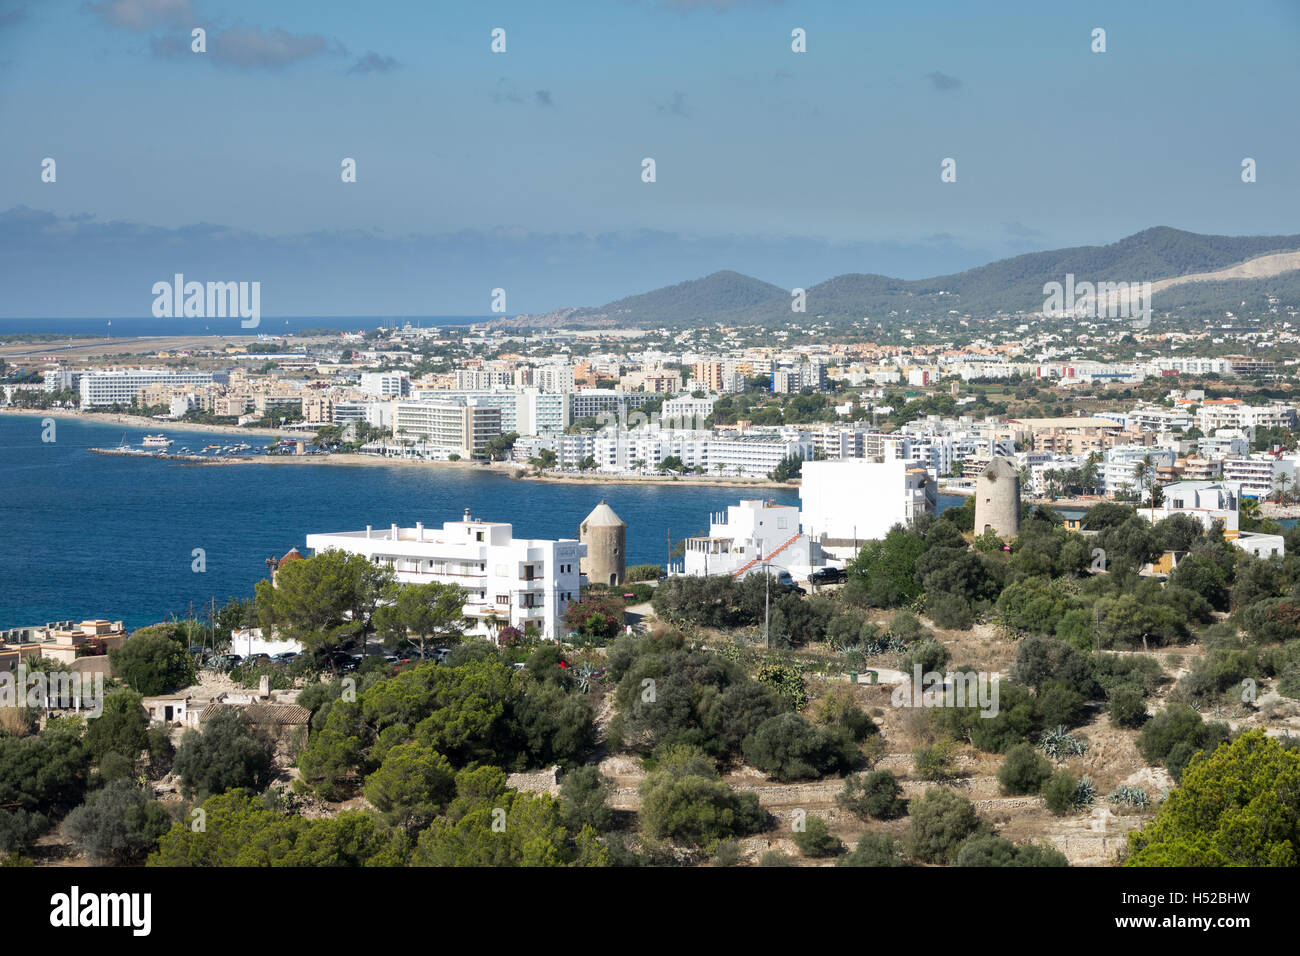 General view of the holiday resort of Platja d'en Bossa (Playa d'en Bossa) in Ibiza Spain. Stock Photo